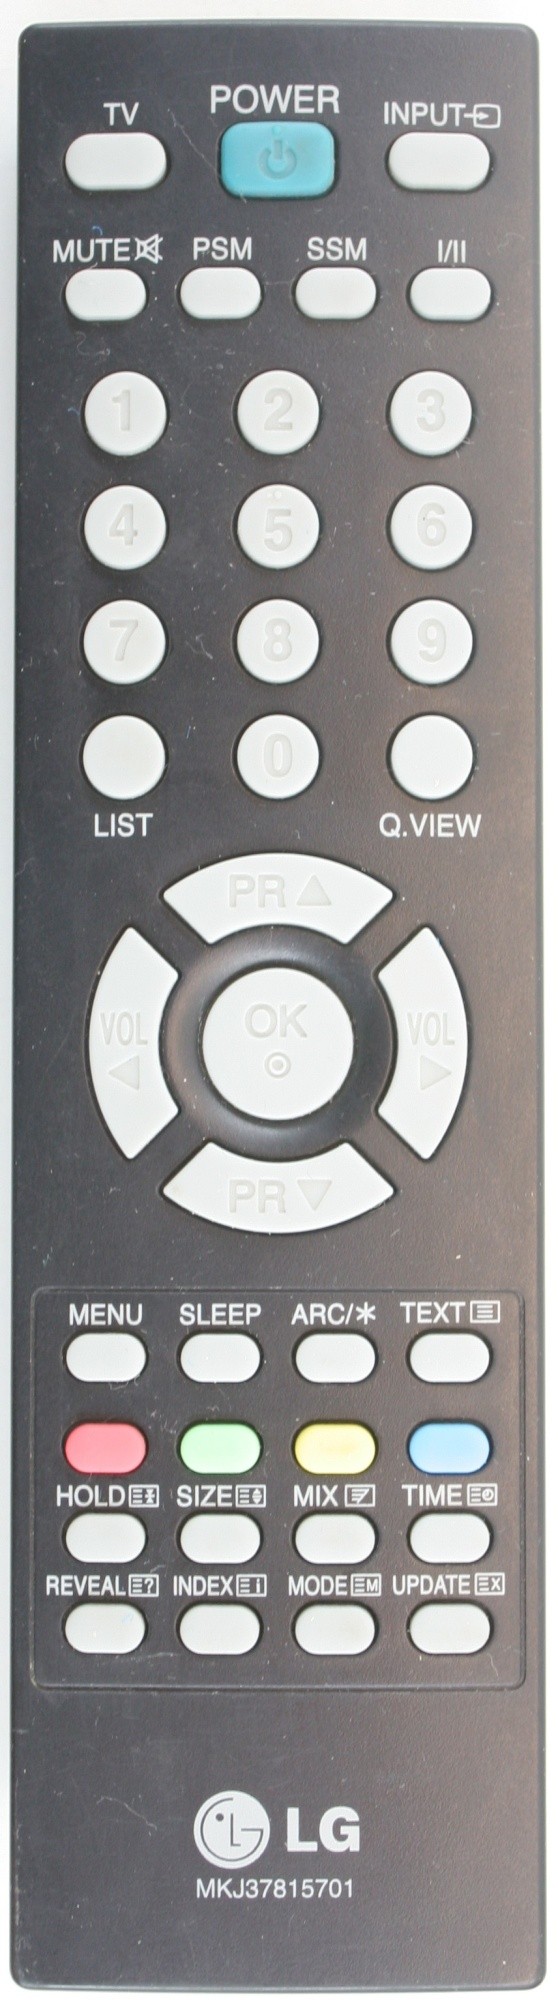 LG 17LS5R Remote Control Original